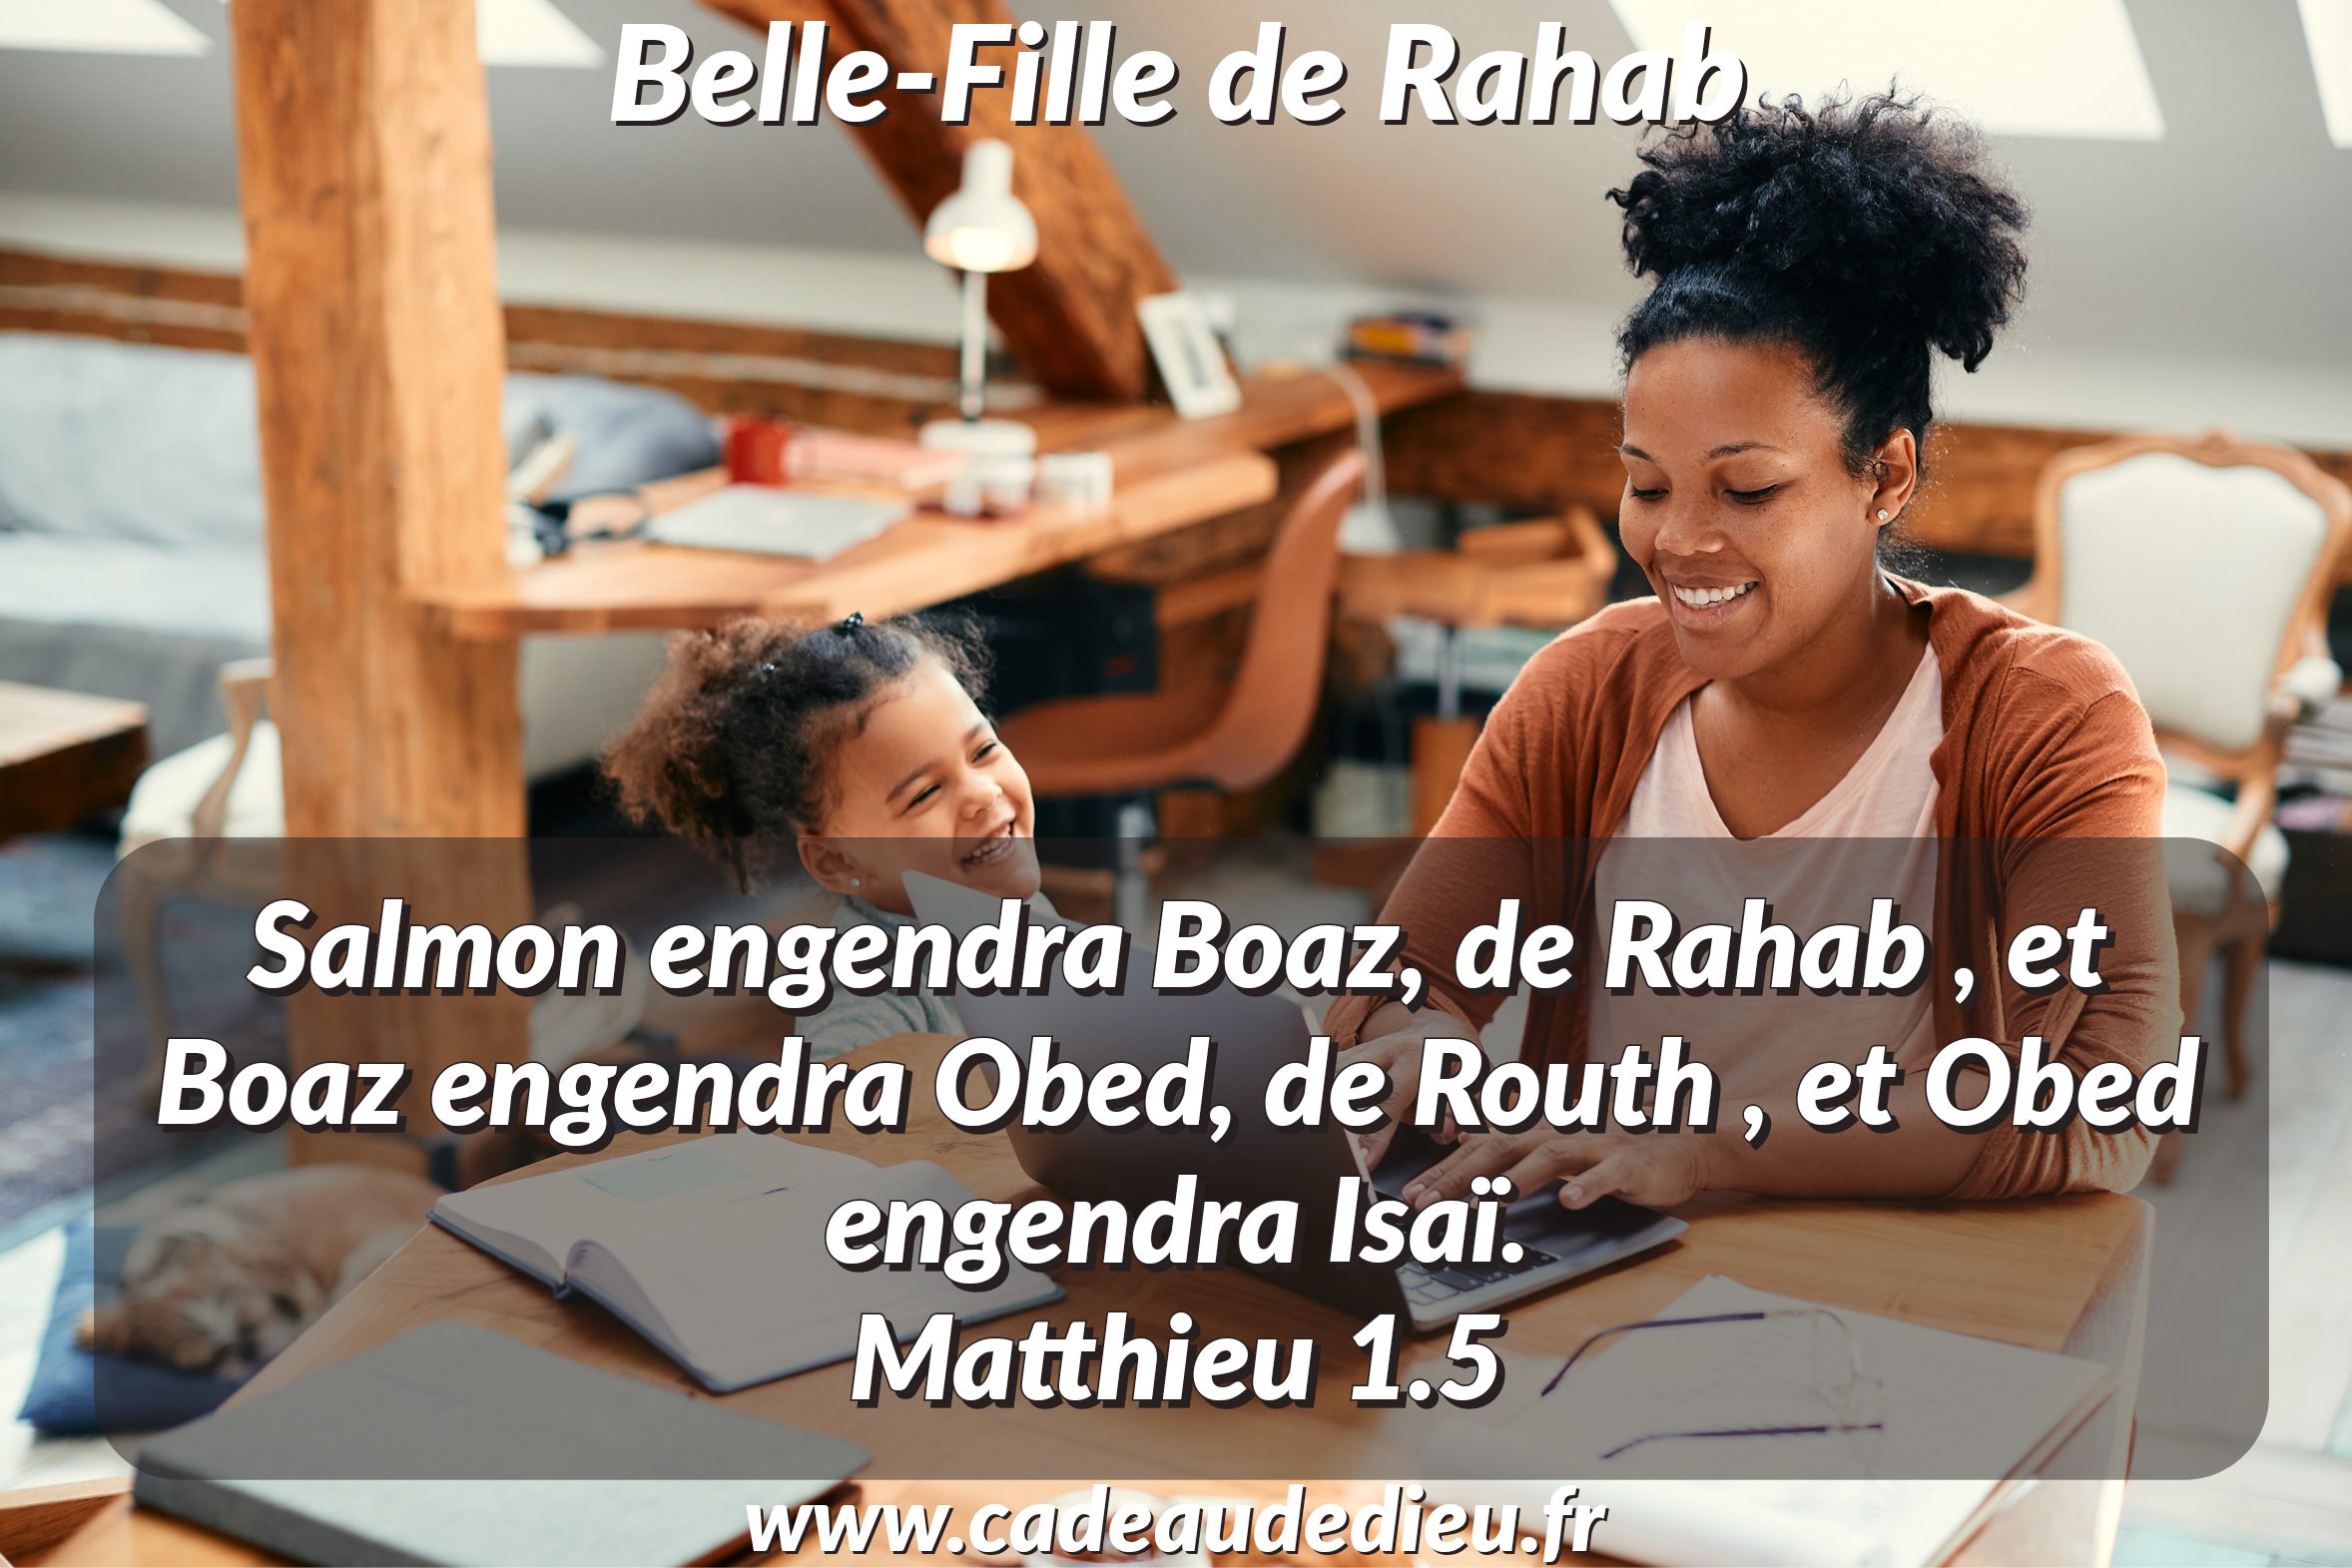 Belle-Fille de Rahab